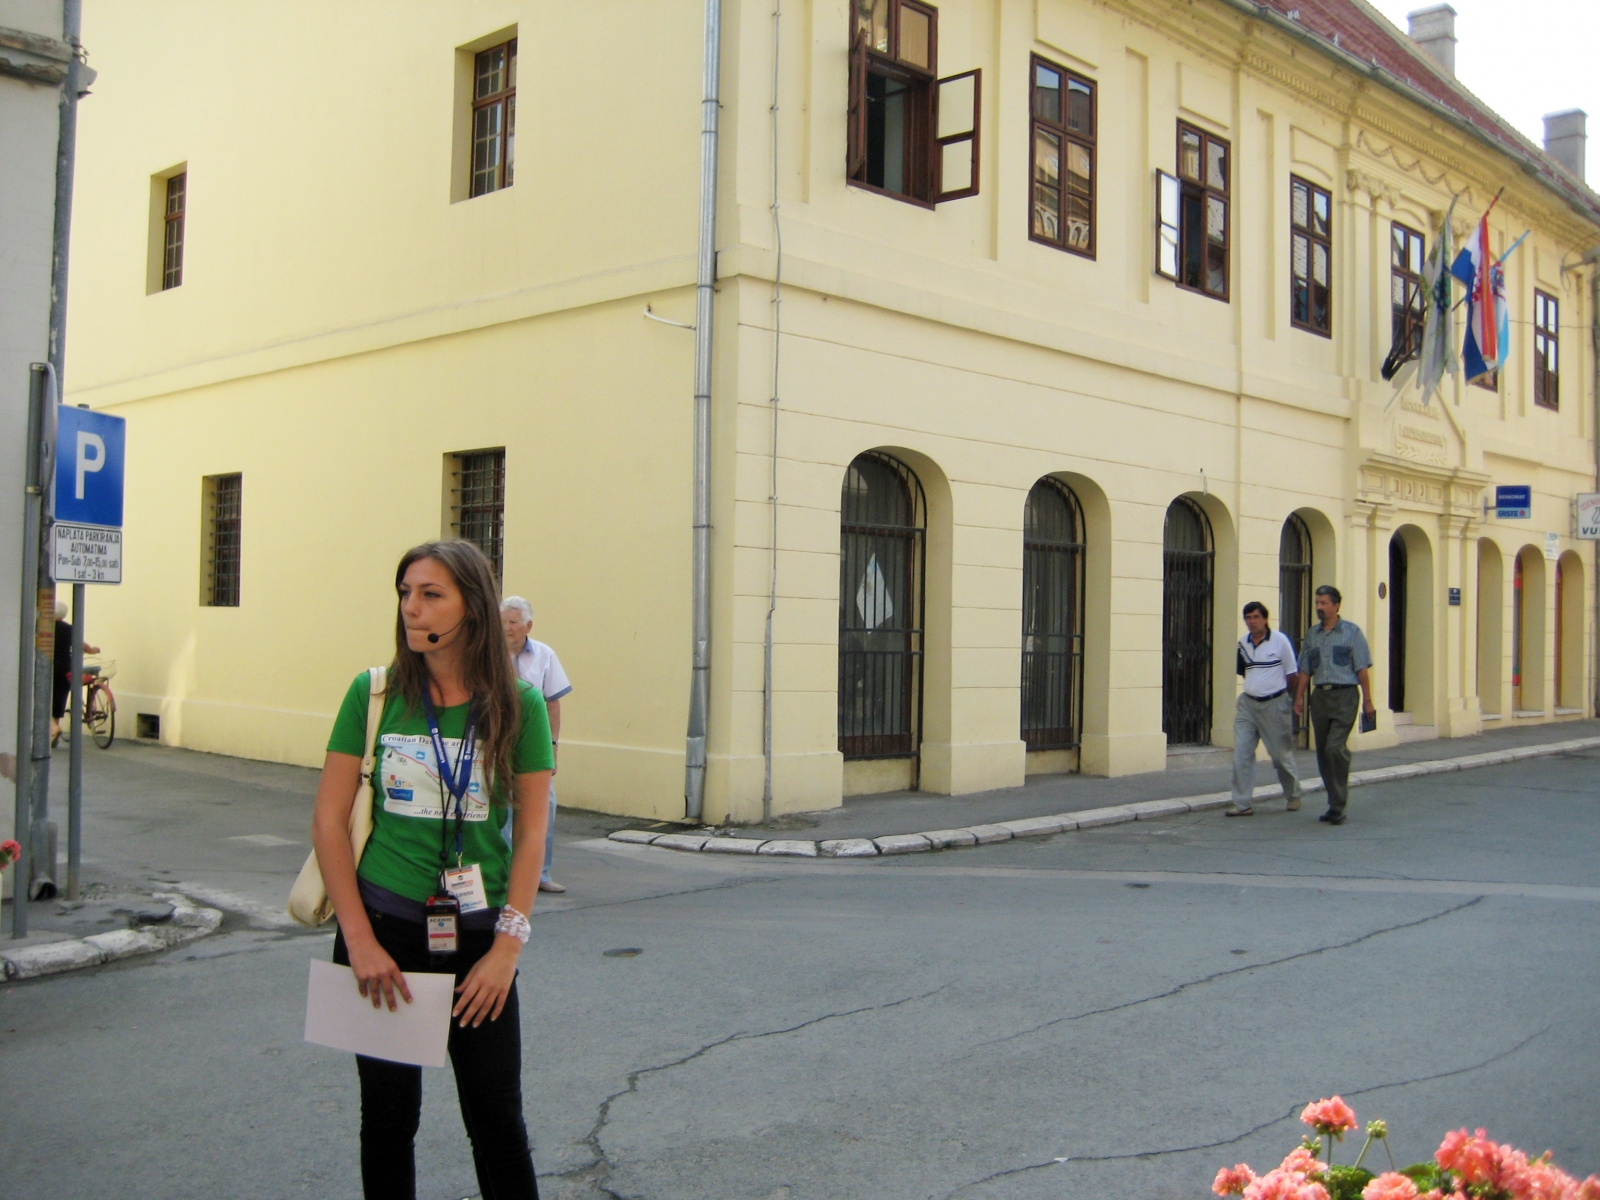 Our guide in Vukovar, Croatia